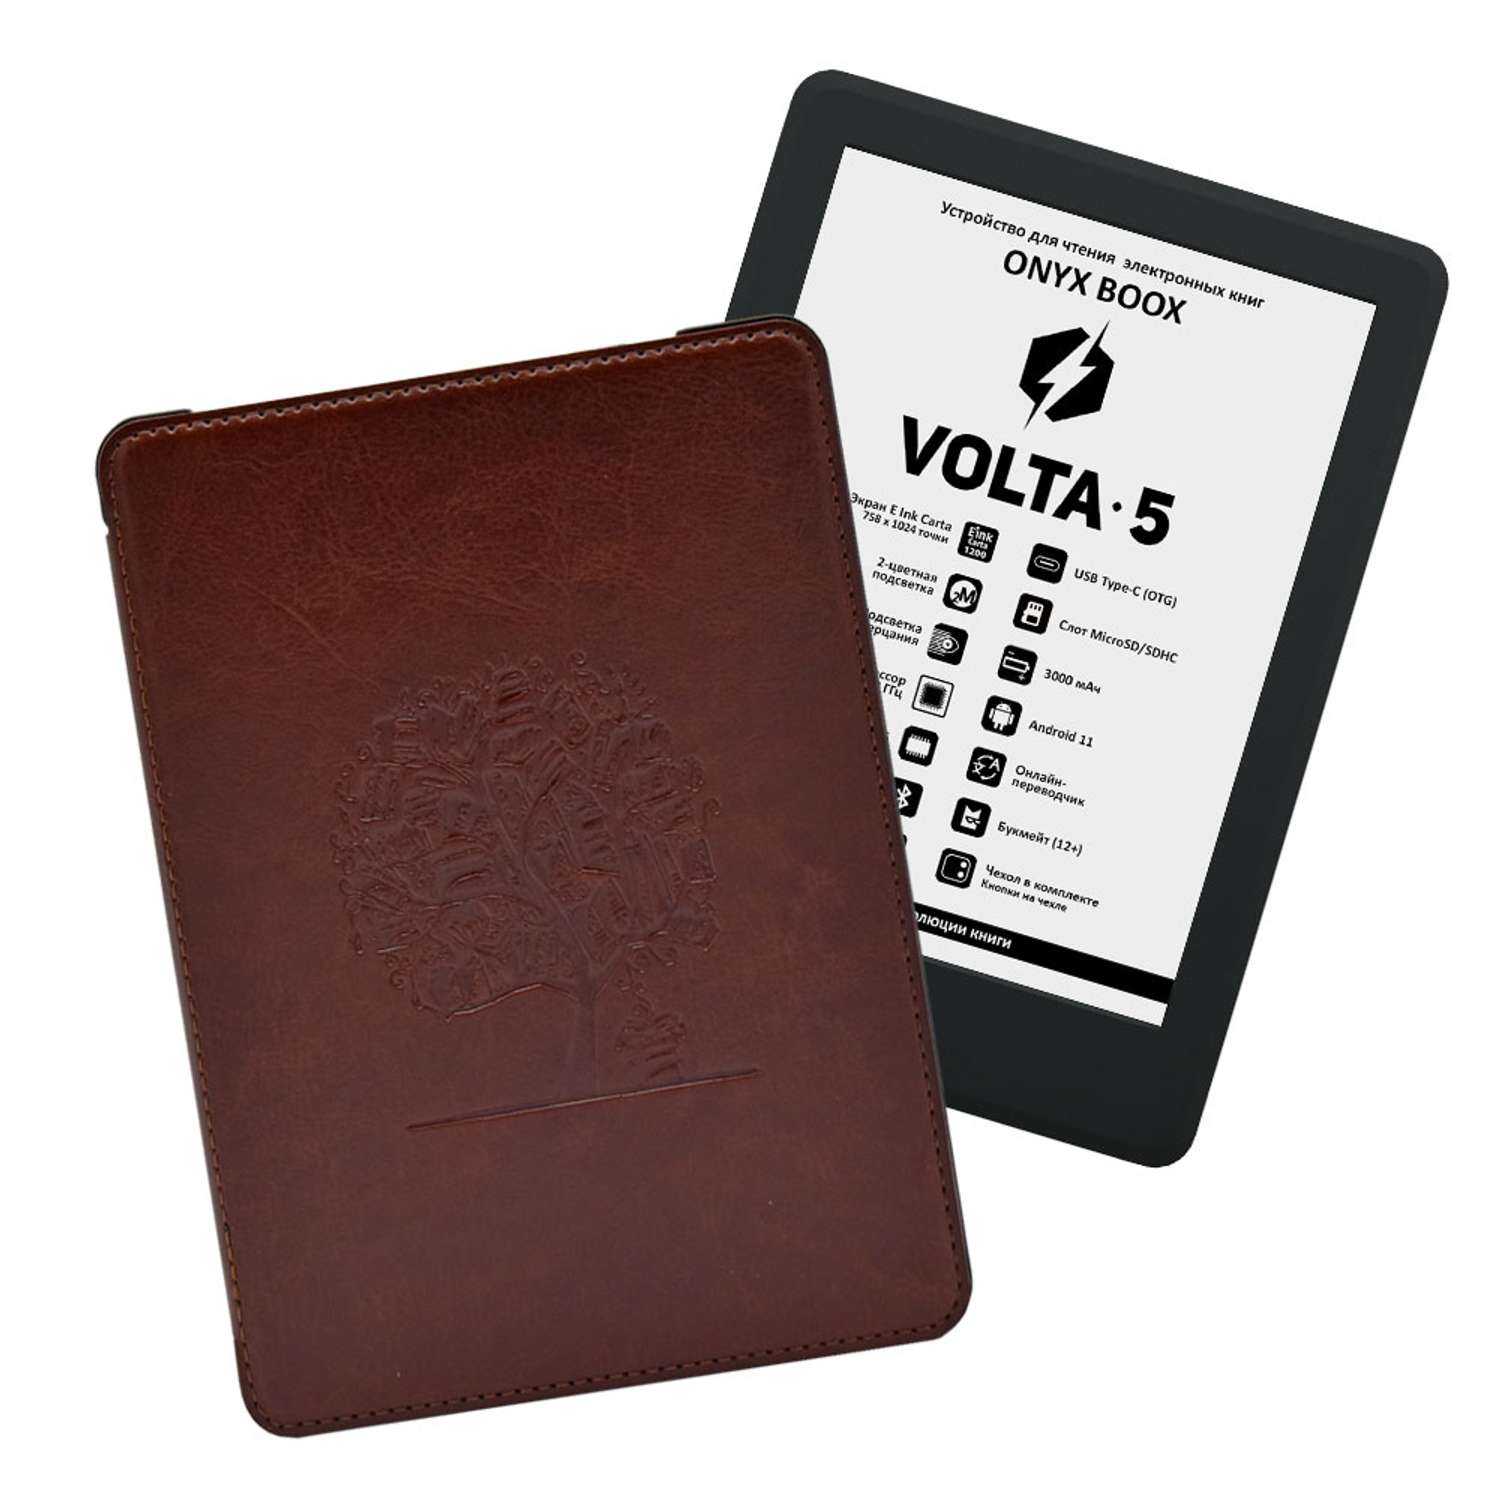 Электронная книга ONYX BOOX Volta 5 - фото 1